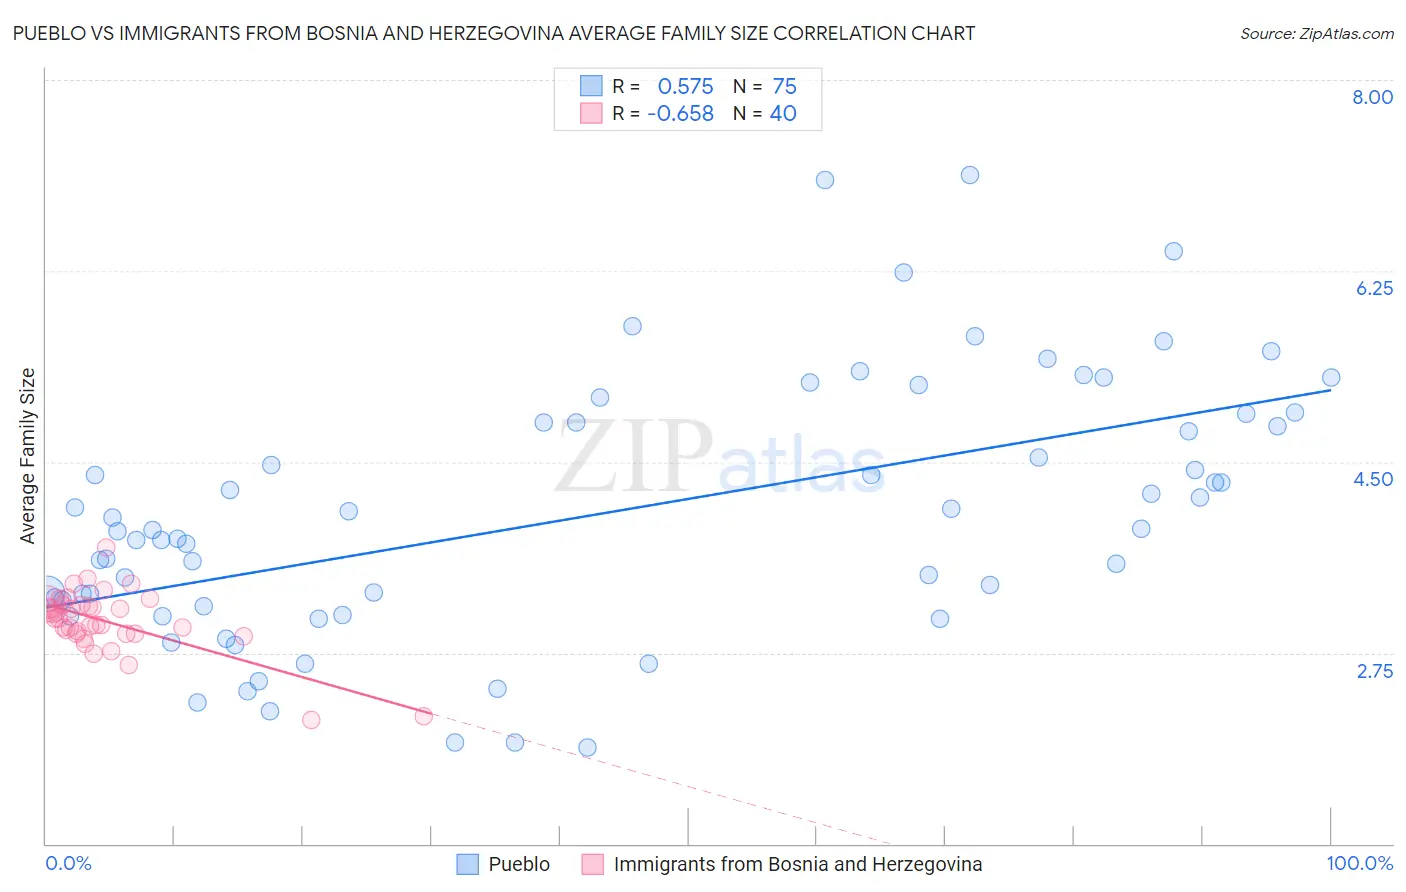 Pueblo vs Immigrants from Bosnia and Herzegovina Average Family Size